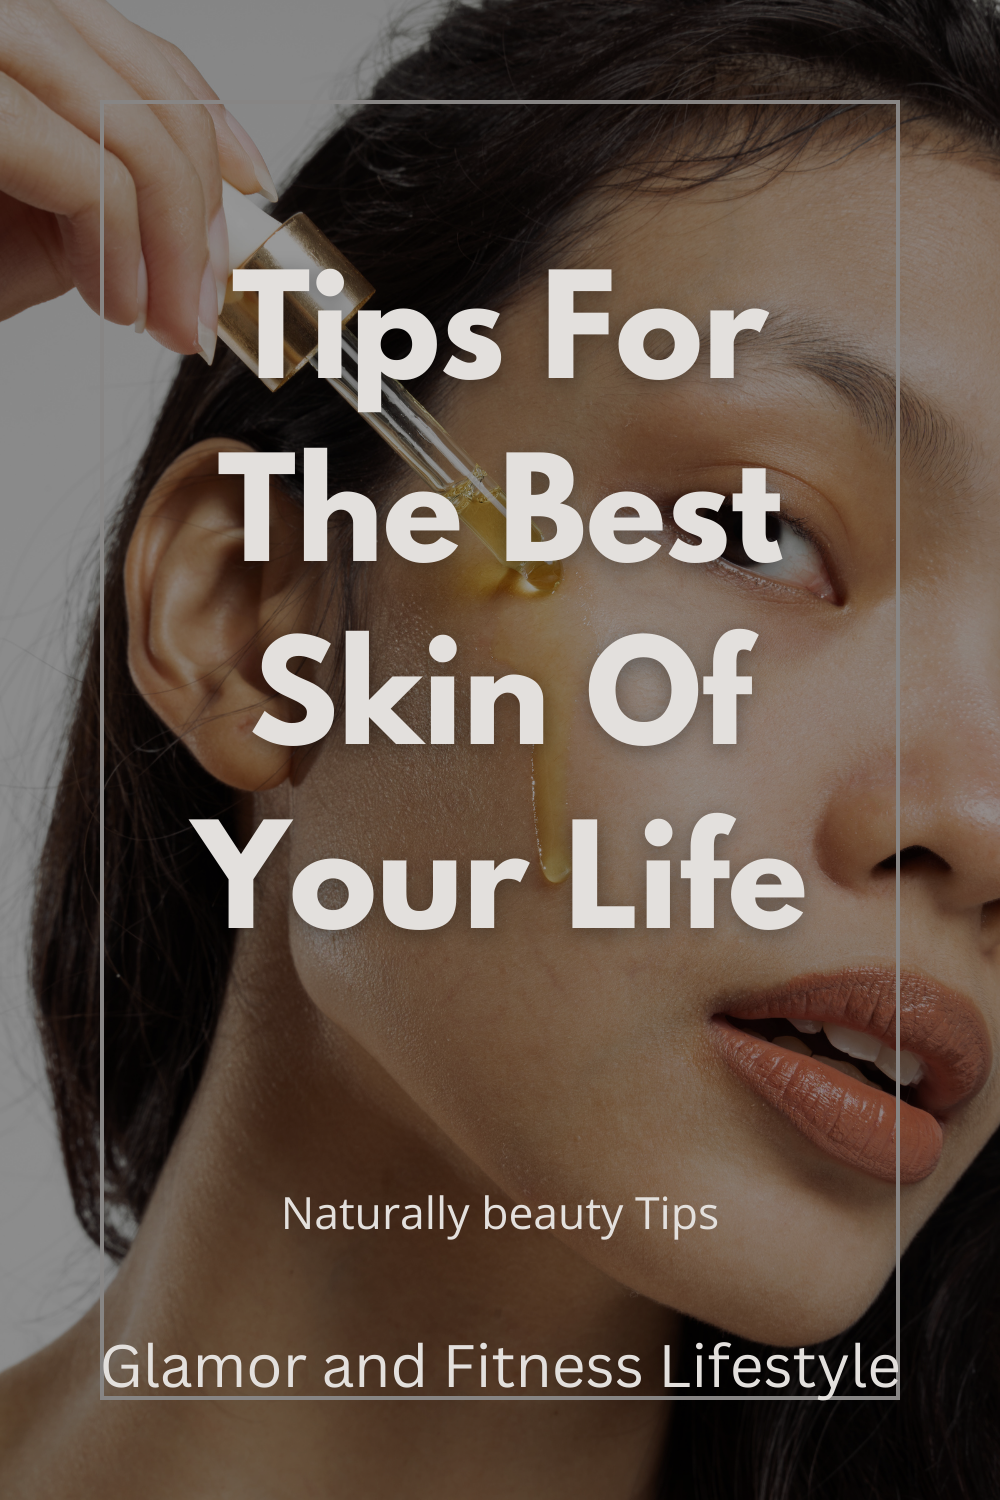 Ultimate natural tips for glowing summer skin | by Harram aqsa | Medium